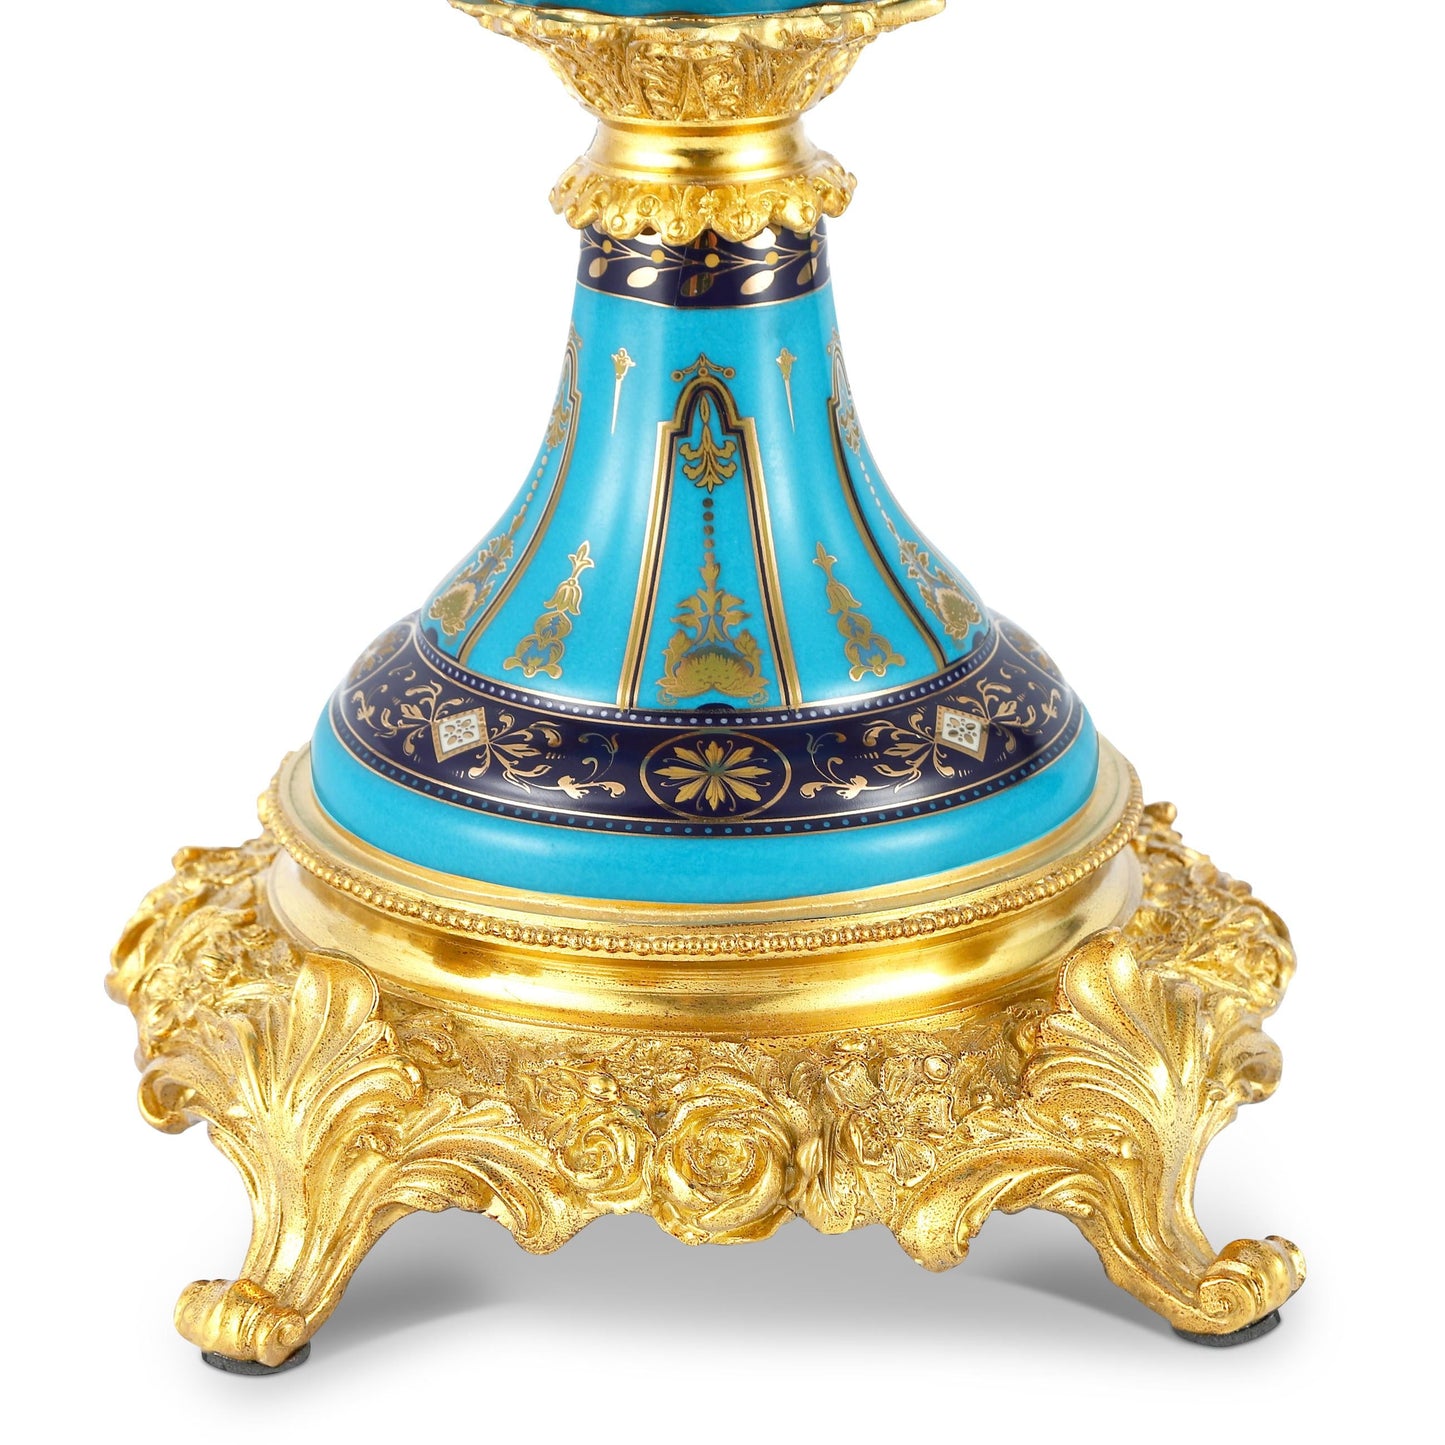 DECOELEVEN ™ Bronze and Porcelain Vase with Cherub Handles